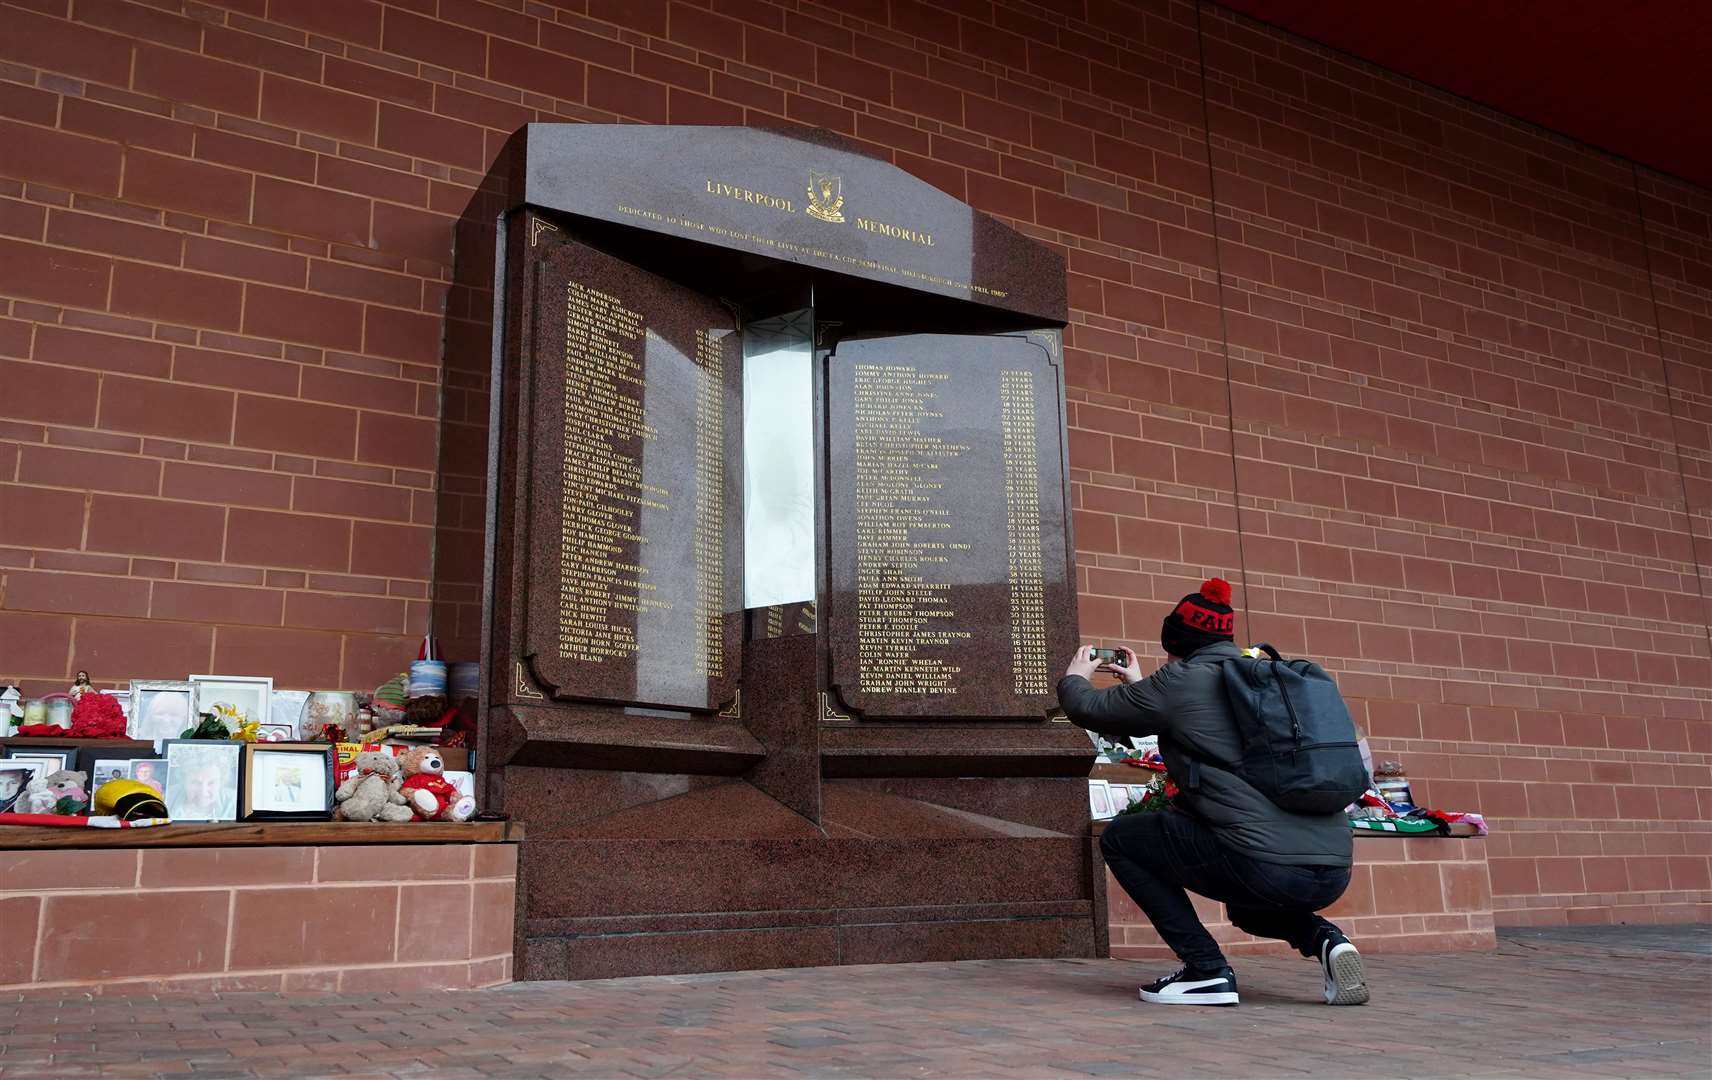 The Hillsborough memorial at Anfield stadium (Peter Byrne/PA)